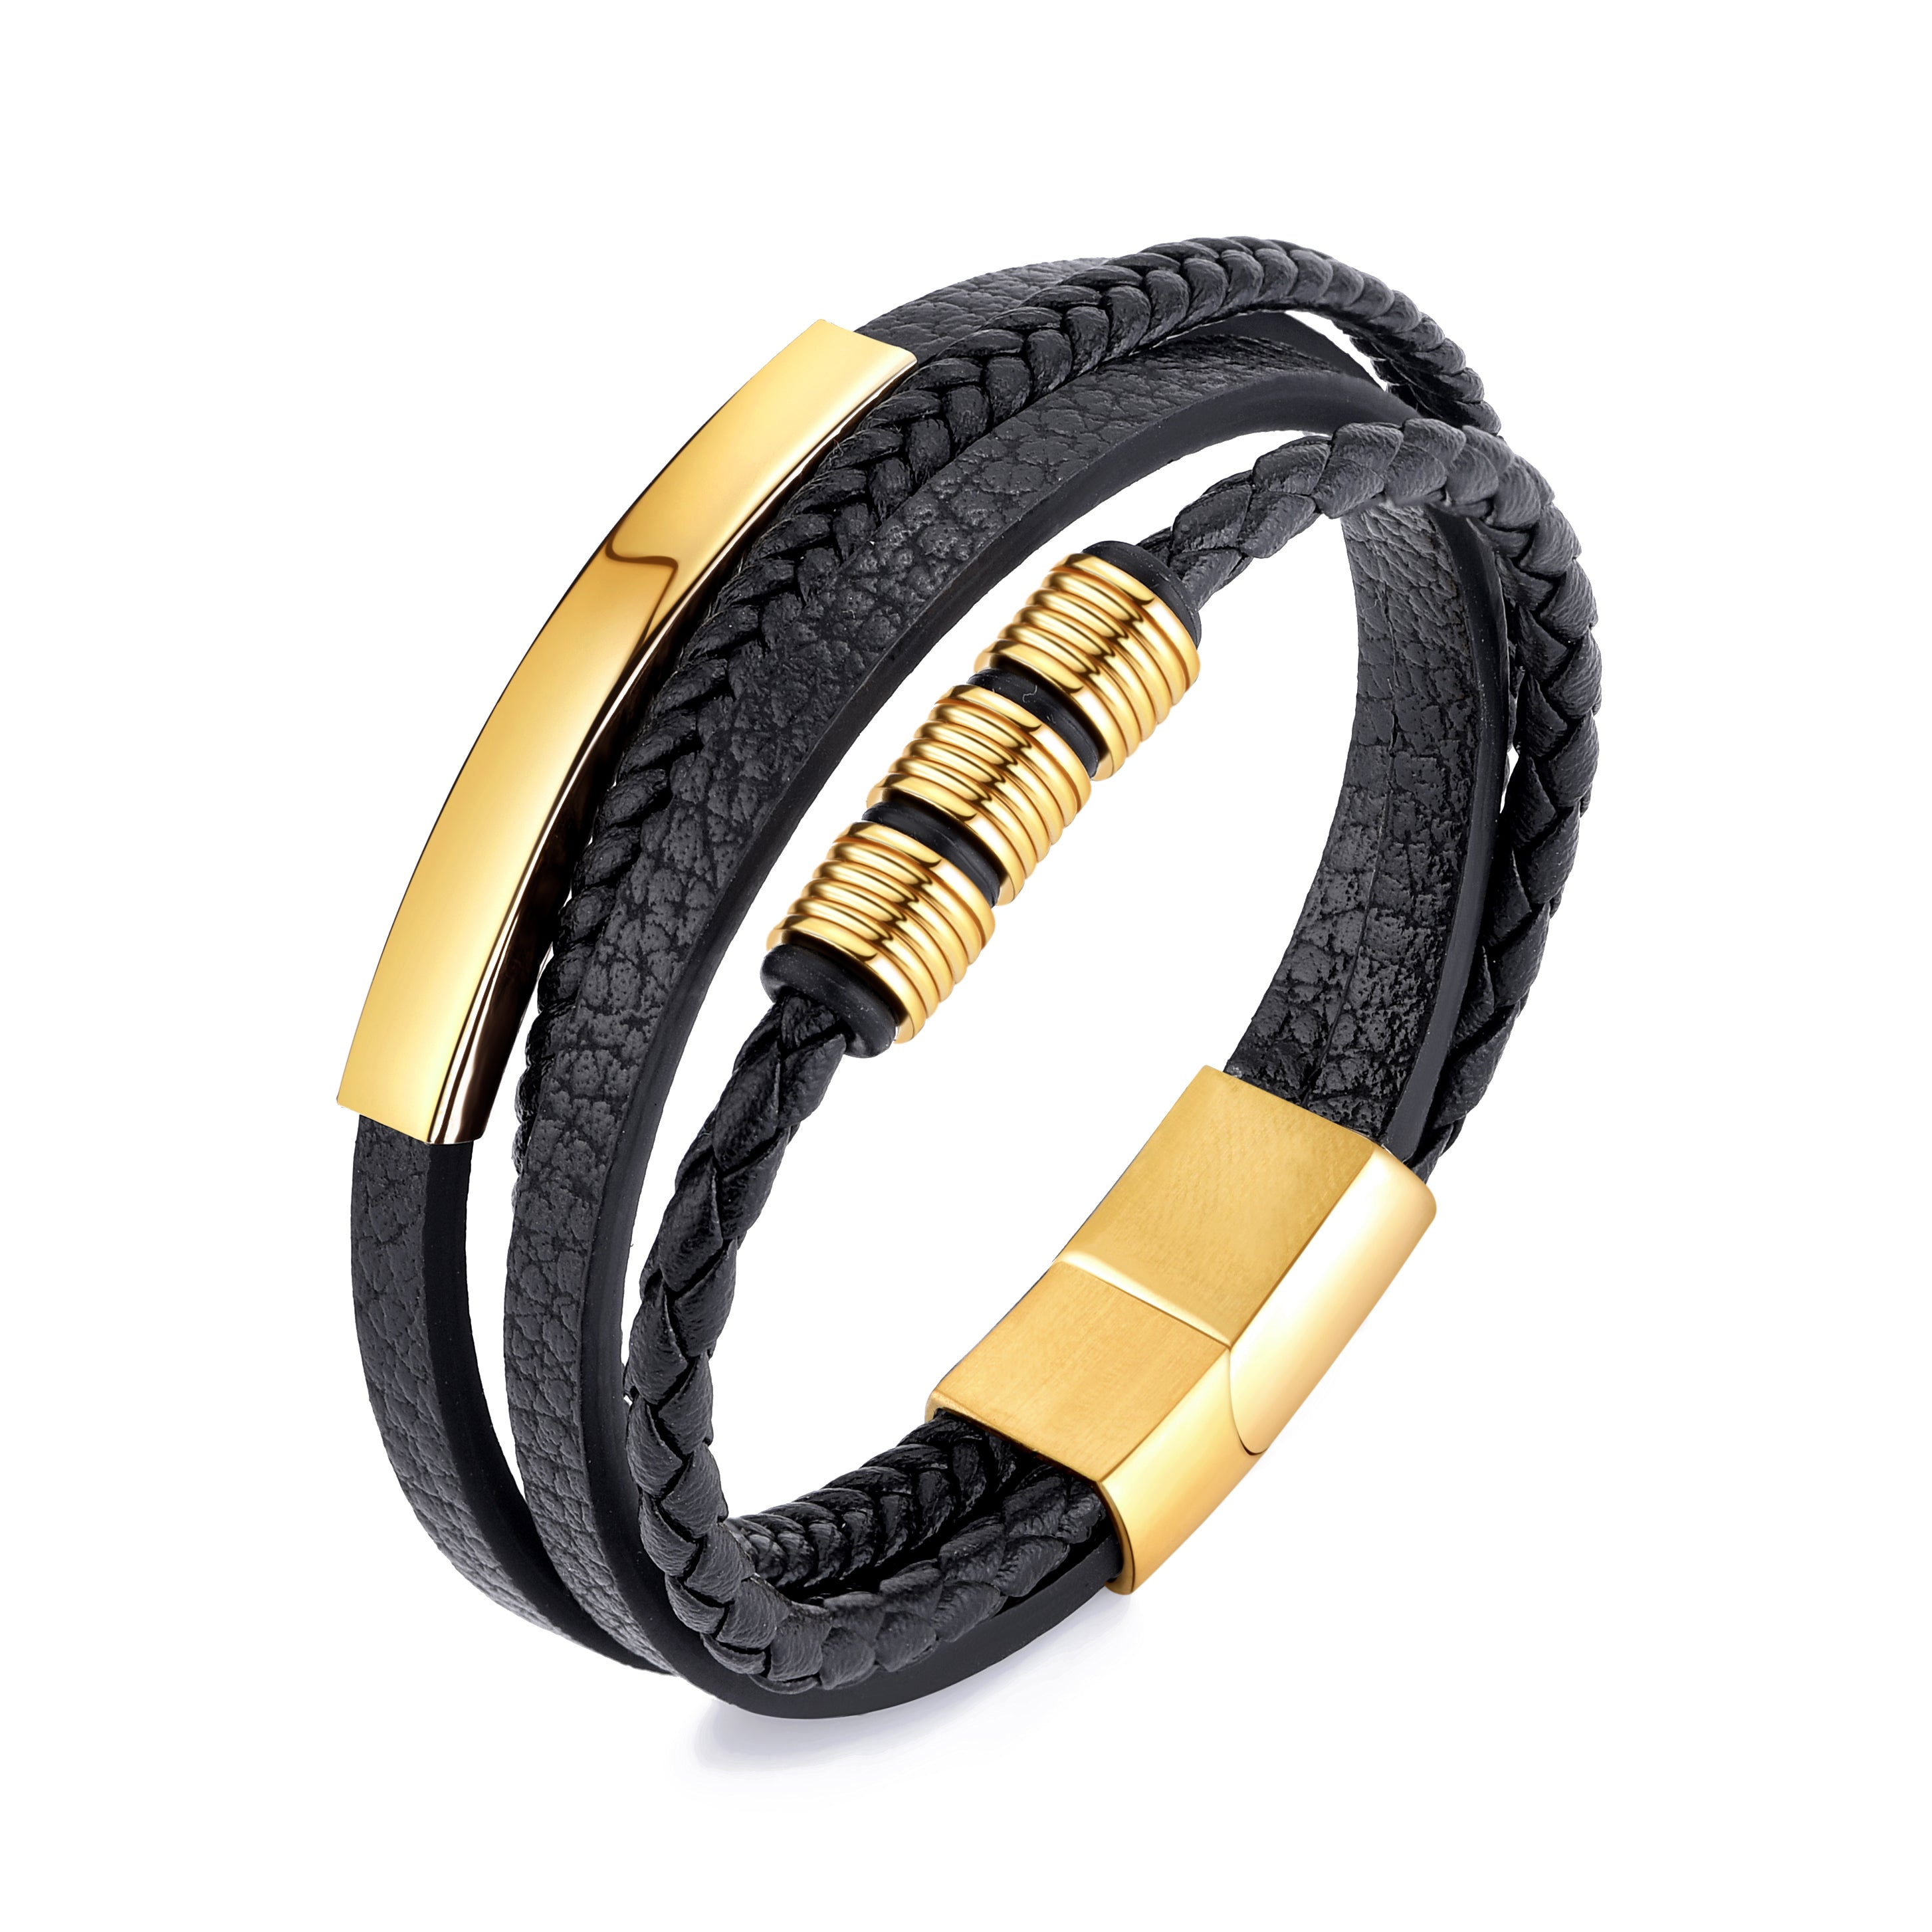 Men's Gold Plated Steel Genuine Black Leather Double Braided Bracelet by Philip Jones Jewellery